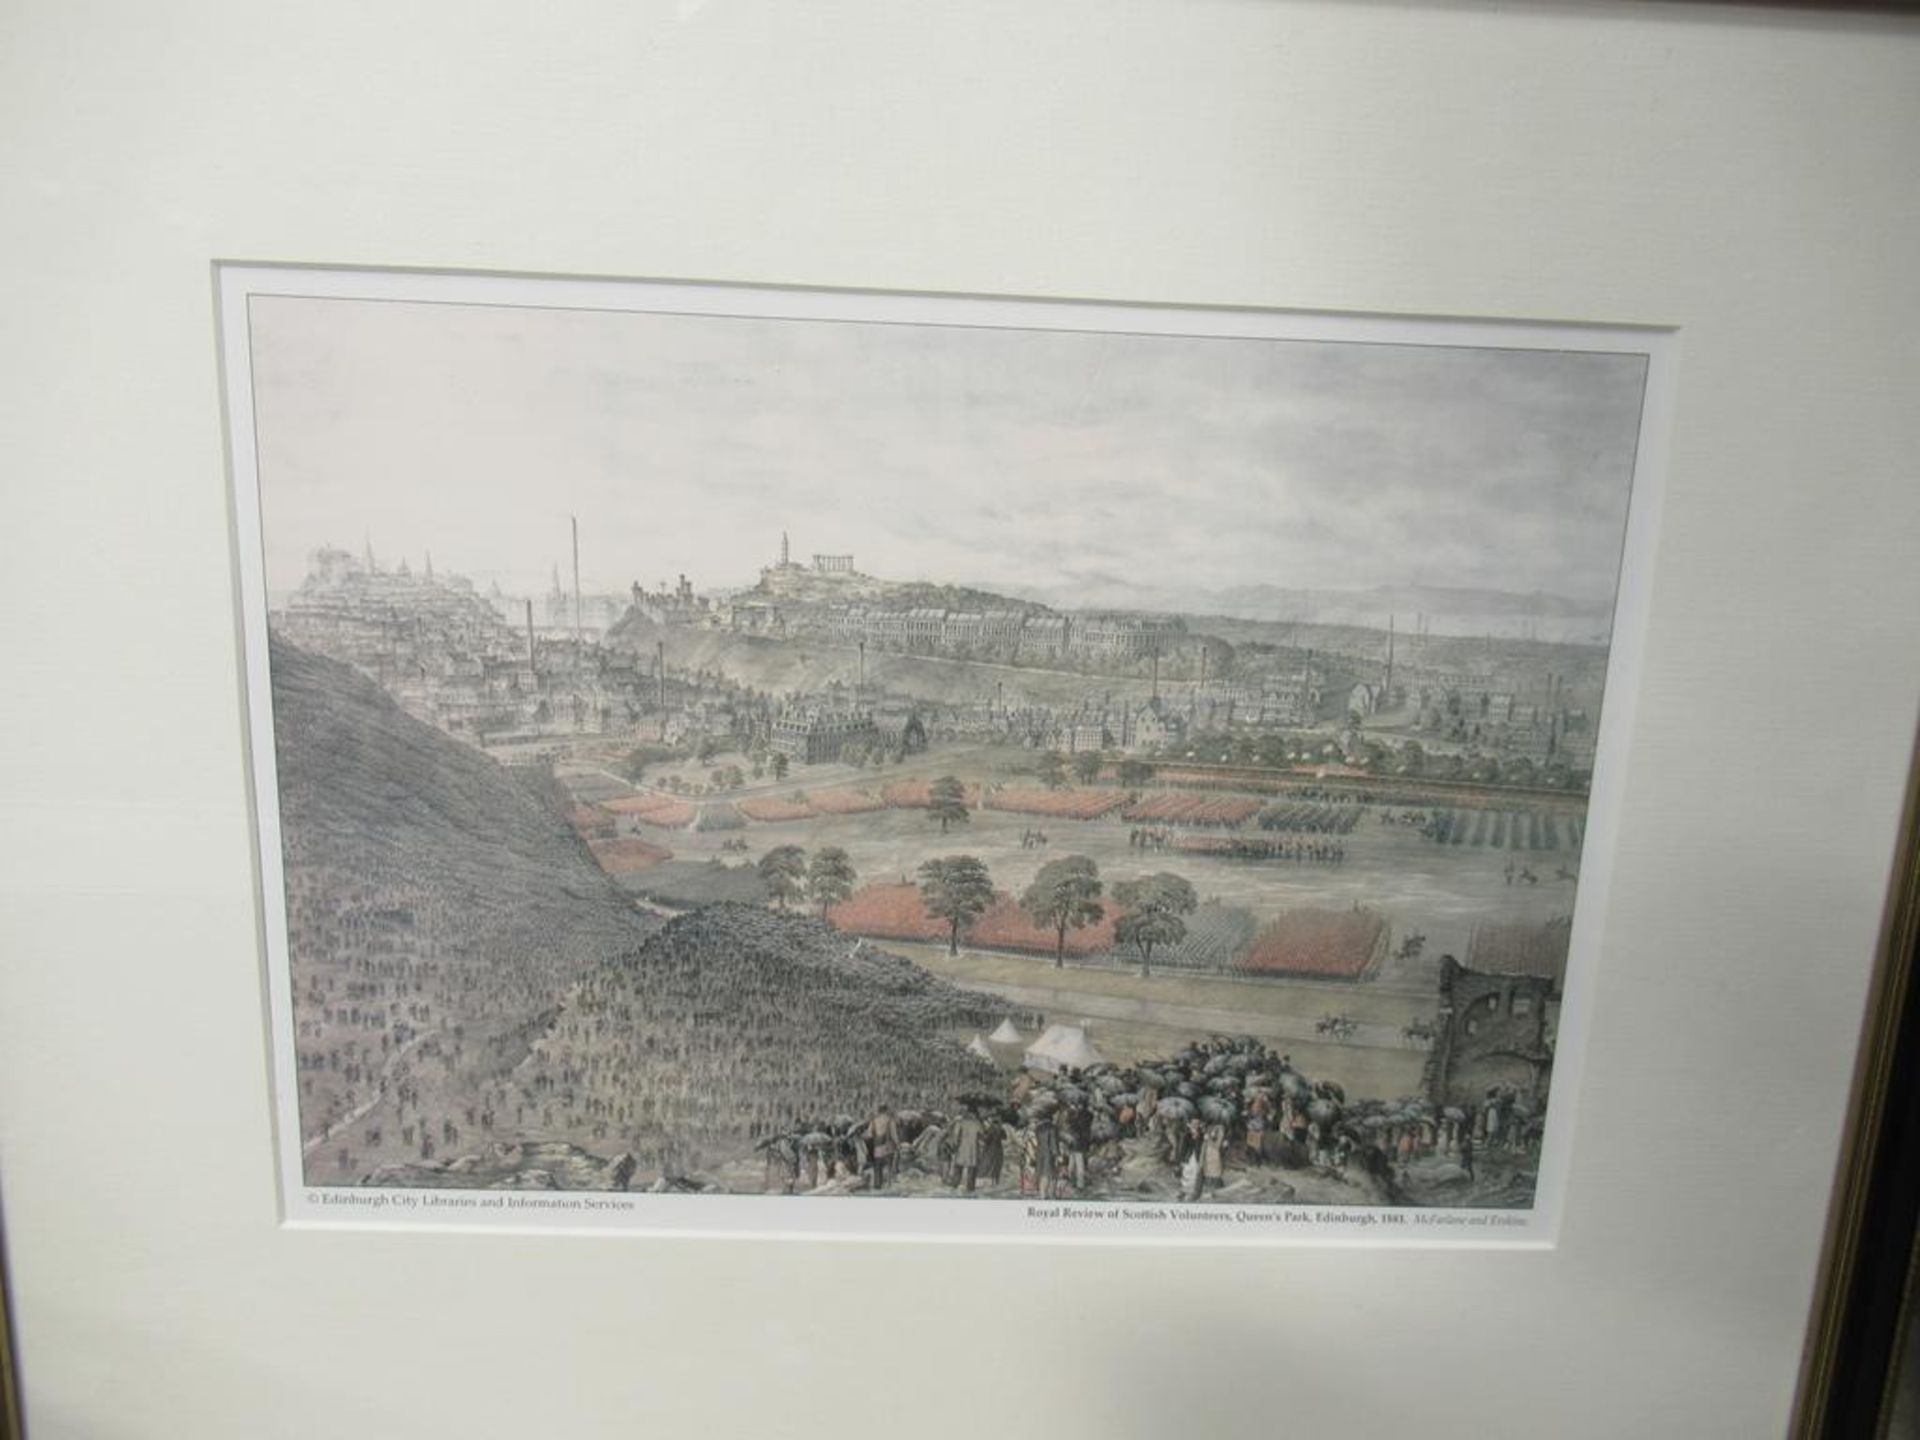 10 x Edinburgh City Libraries & Information Services Prints of Scottish Landscapes, Monuments & Scen - Image 11 of 11